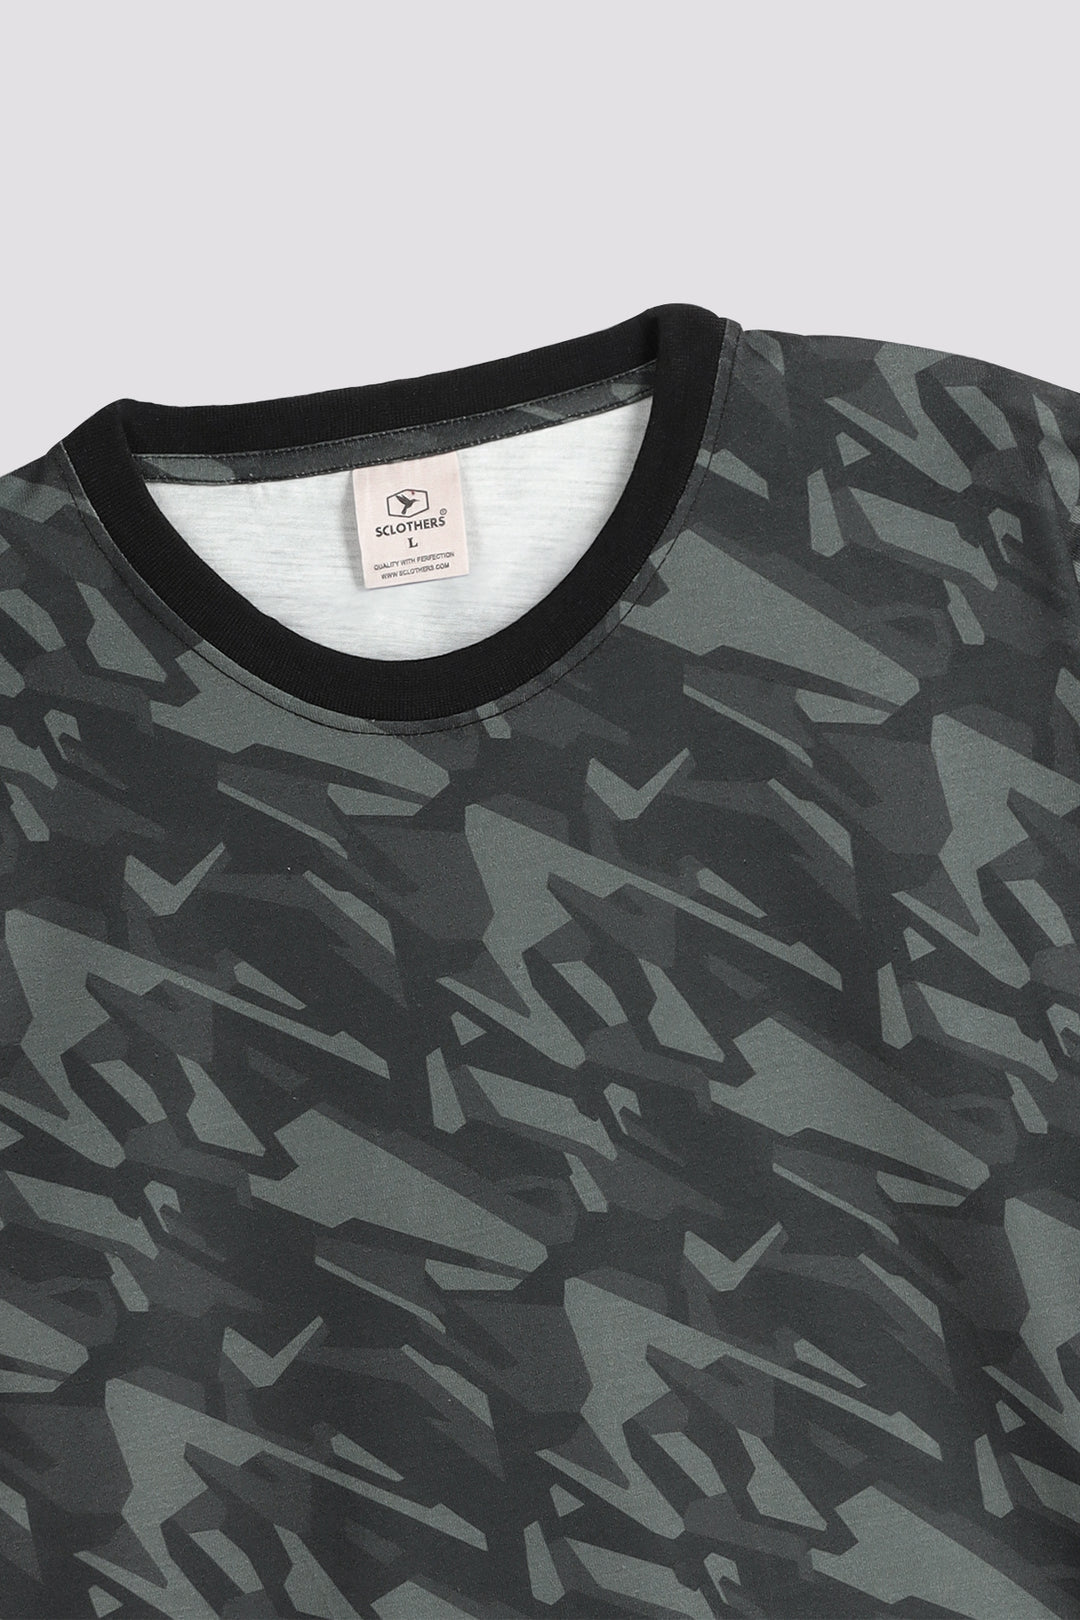 Black & Grey Abstract Printed T-Shirt - A24 - MT0318R